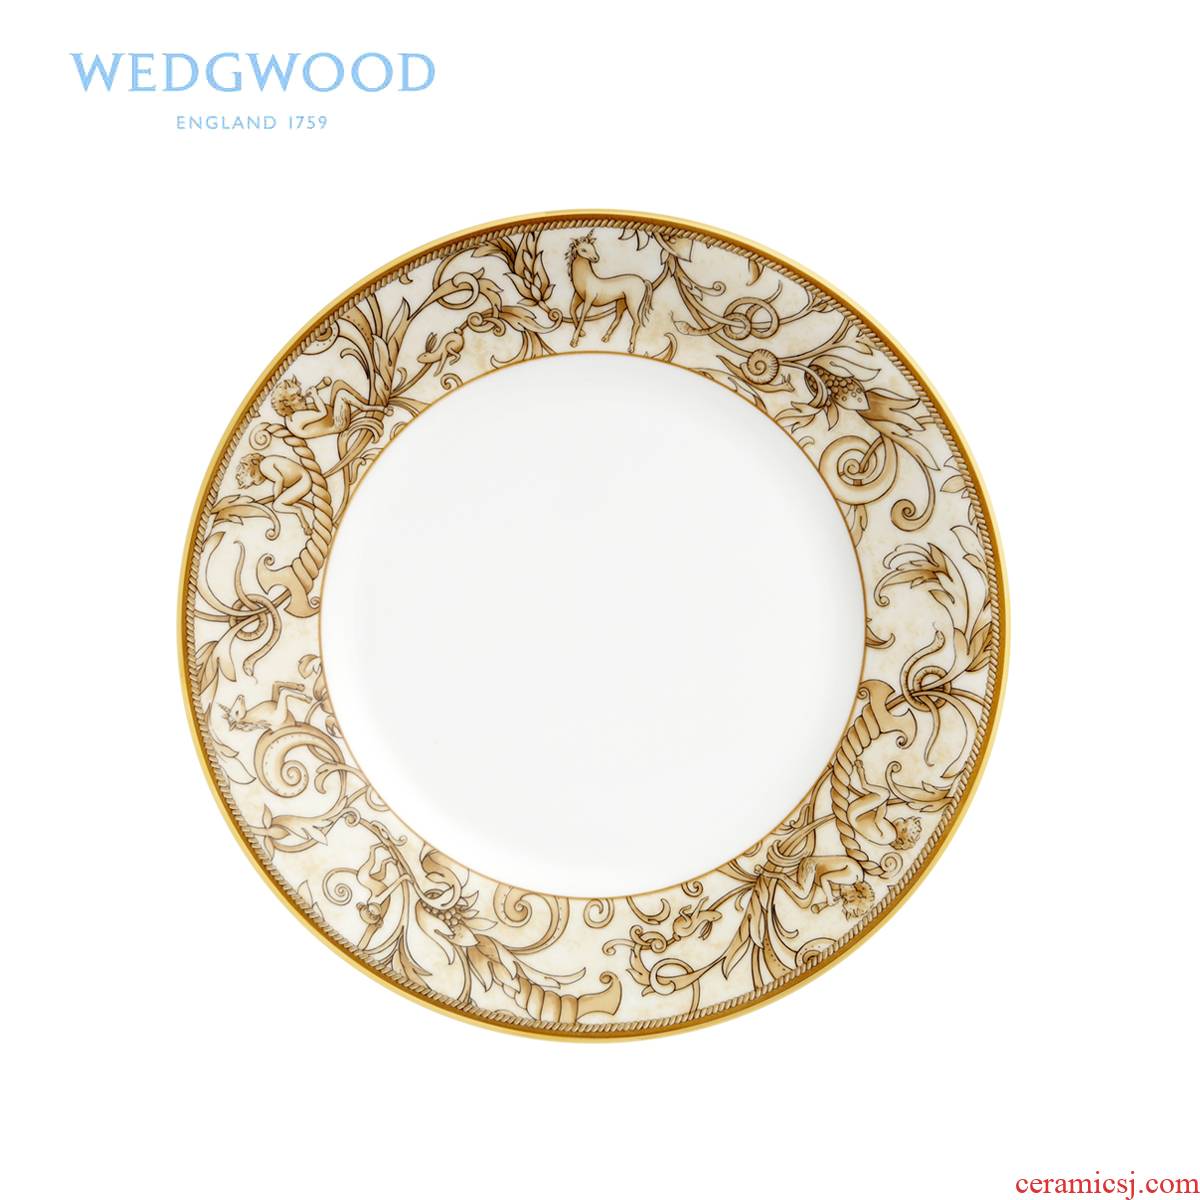 Wedgwood Cornucopia the Cornucopia of 20 cm ipads porcelain plates (disc) decorates all the plates